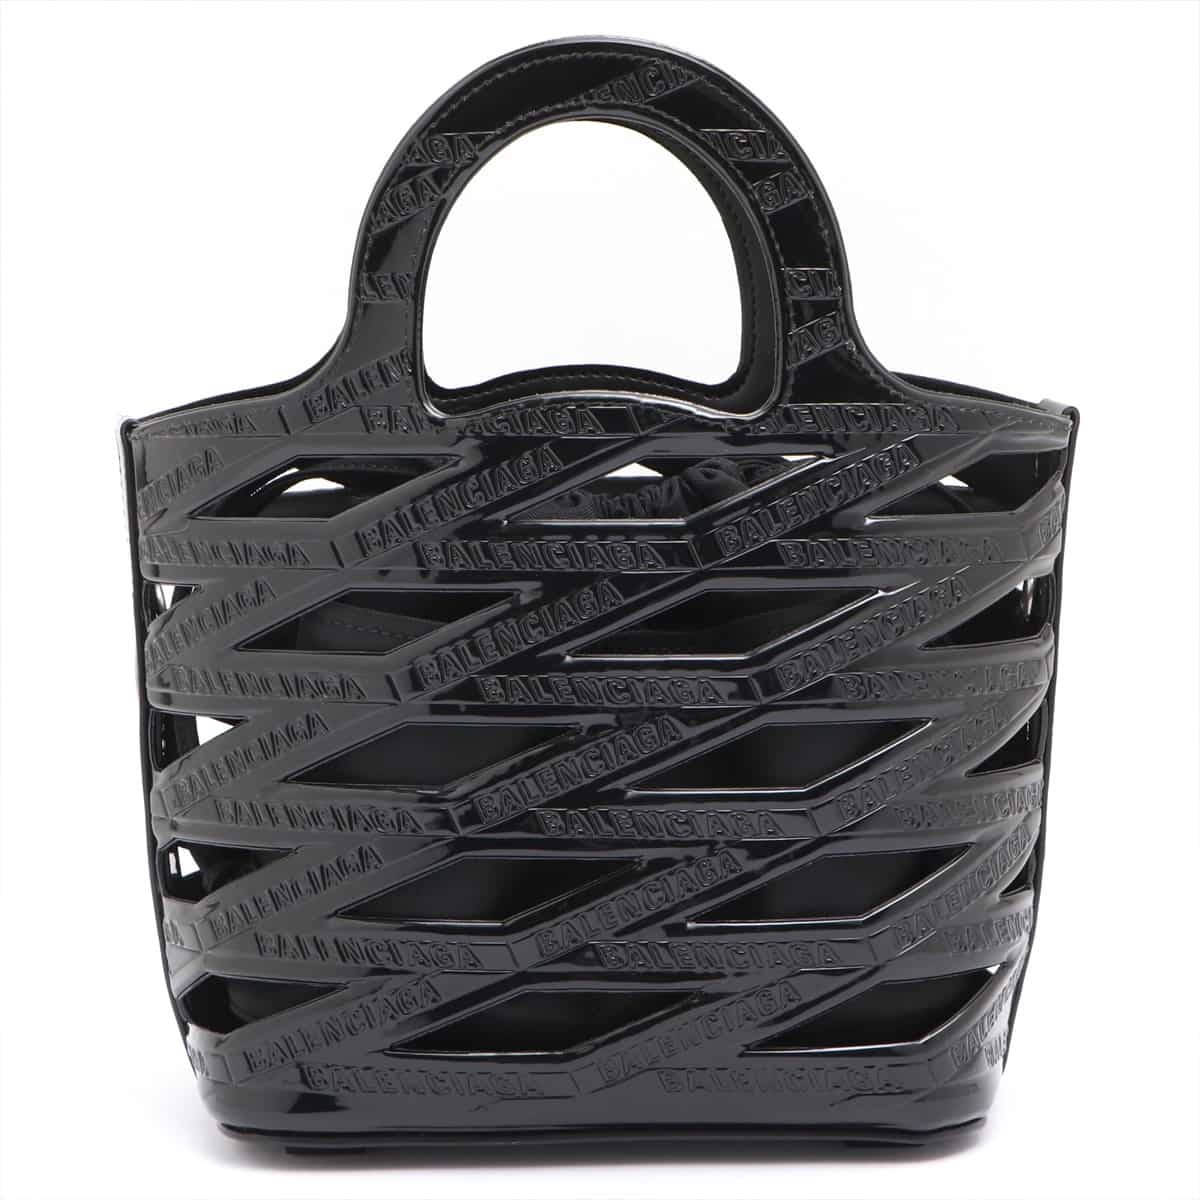 Balenciaga Panier Patent leather 2way handbag Black 630708